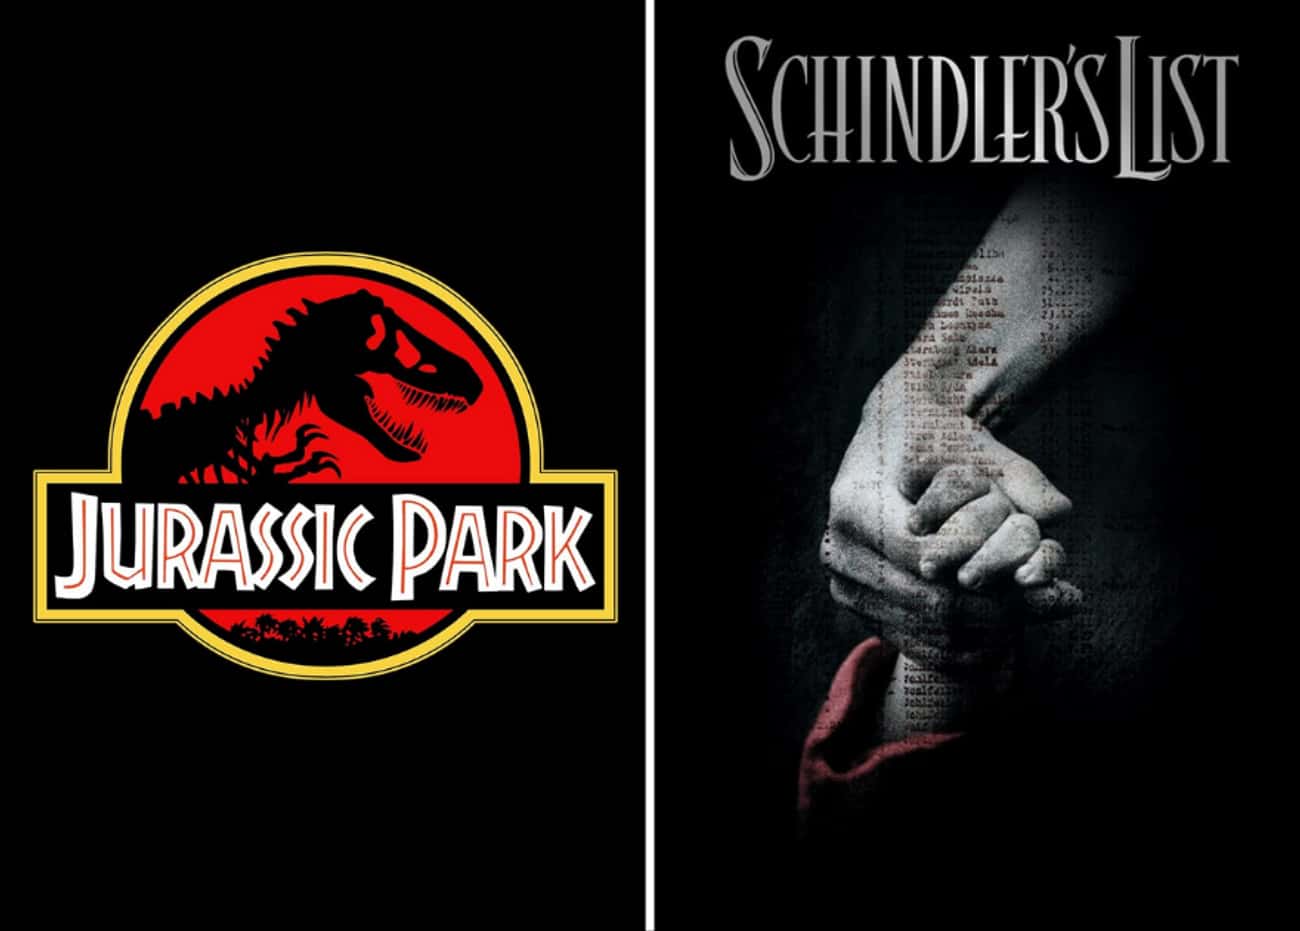 Steven Spielberg - Jurassic Park & Schindler's List